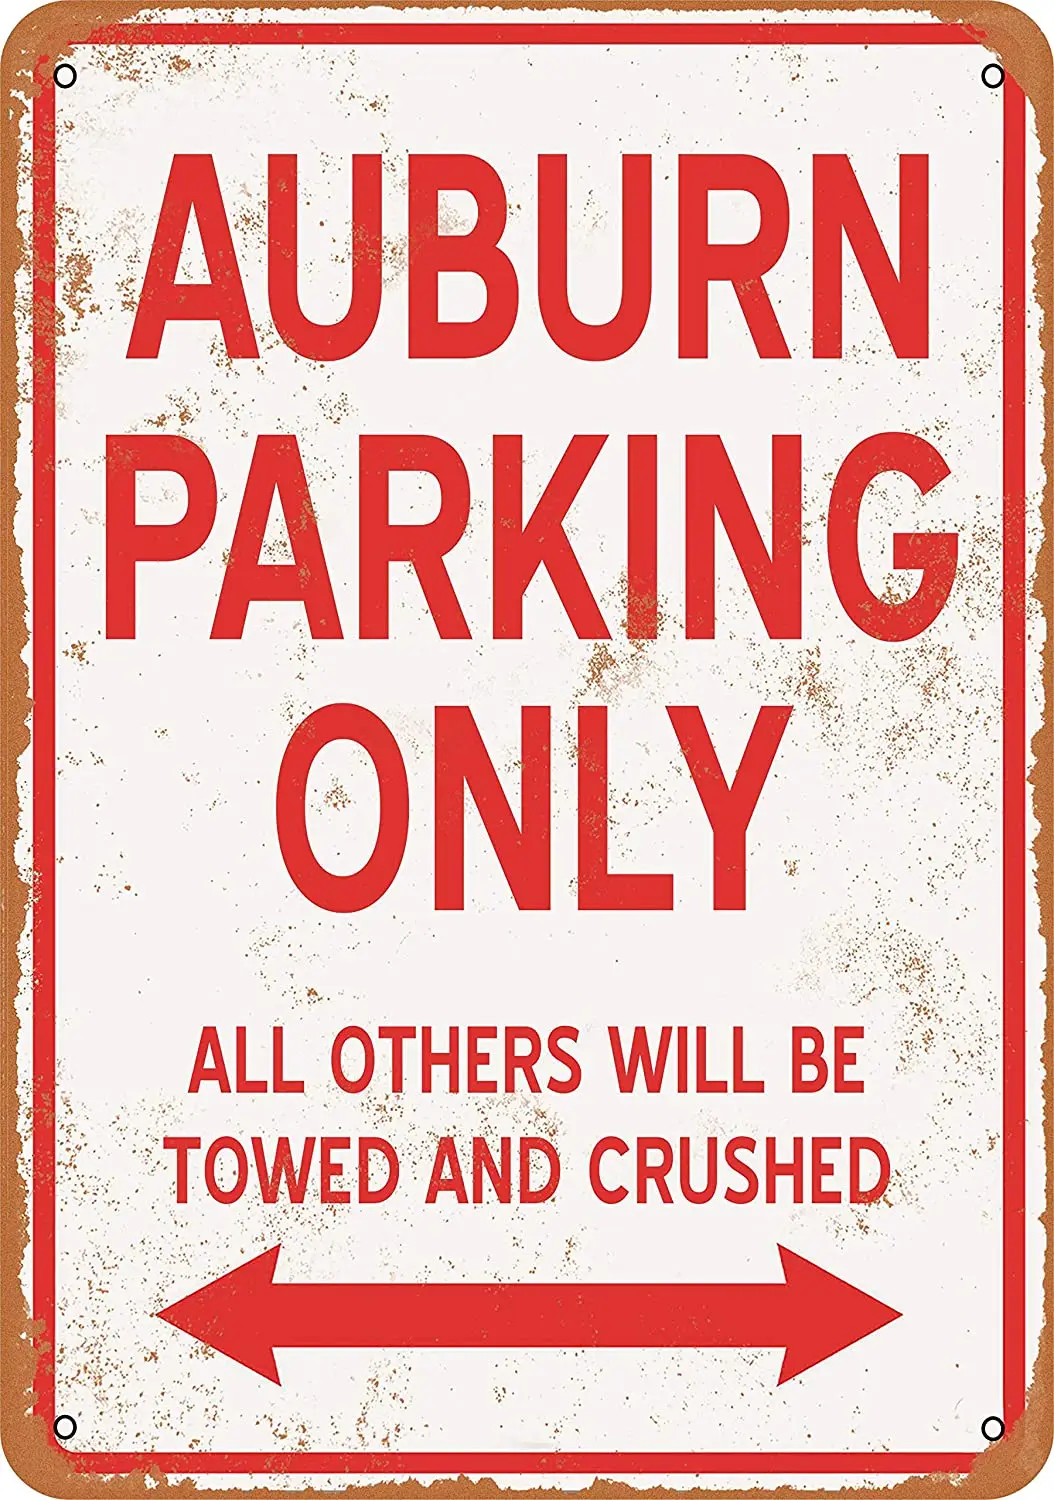 

WallColor 8*12 Metal Sign Auburn Parking ONLY Vintage Look